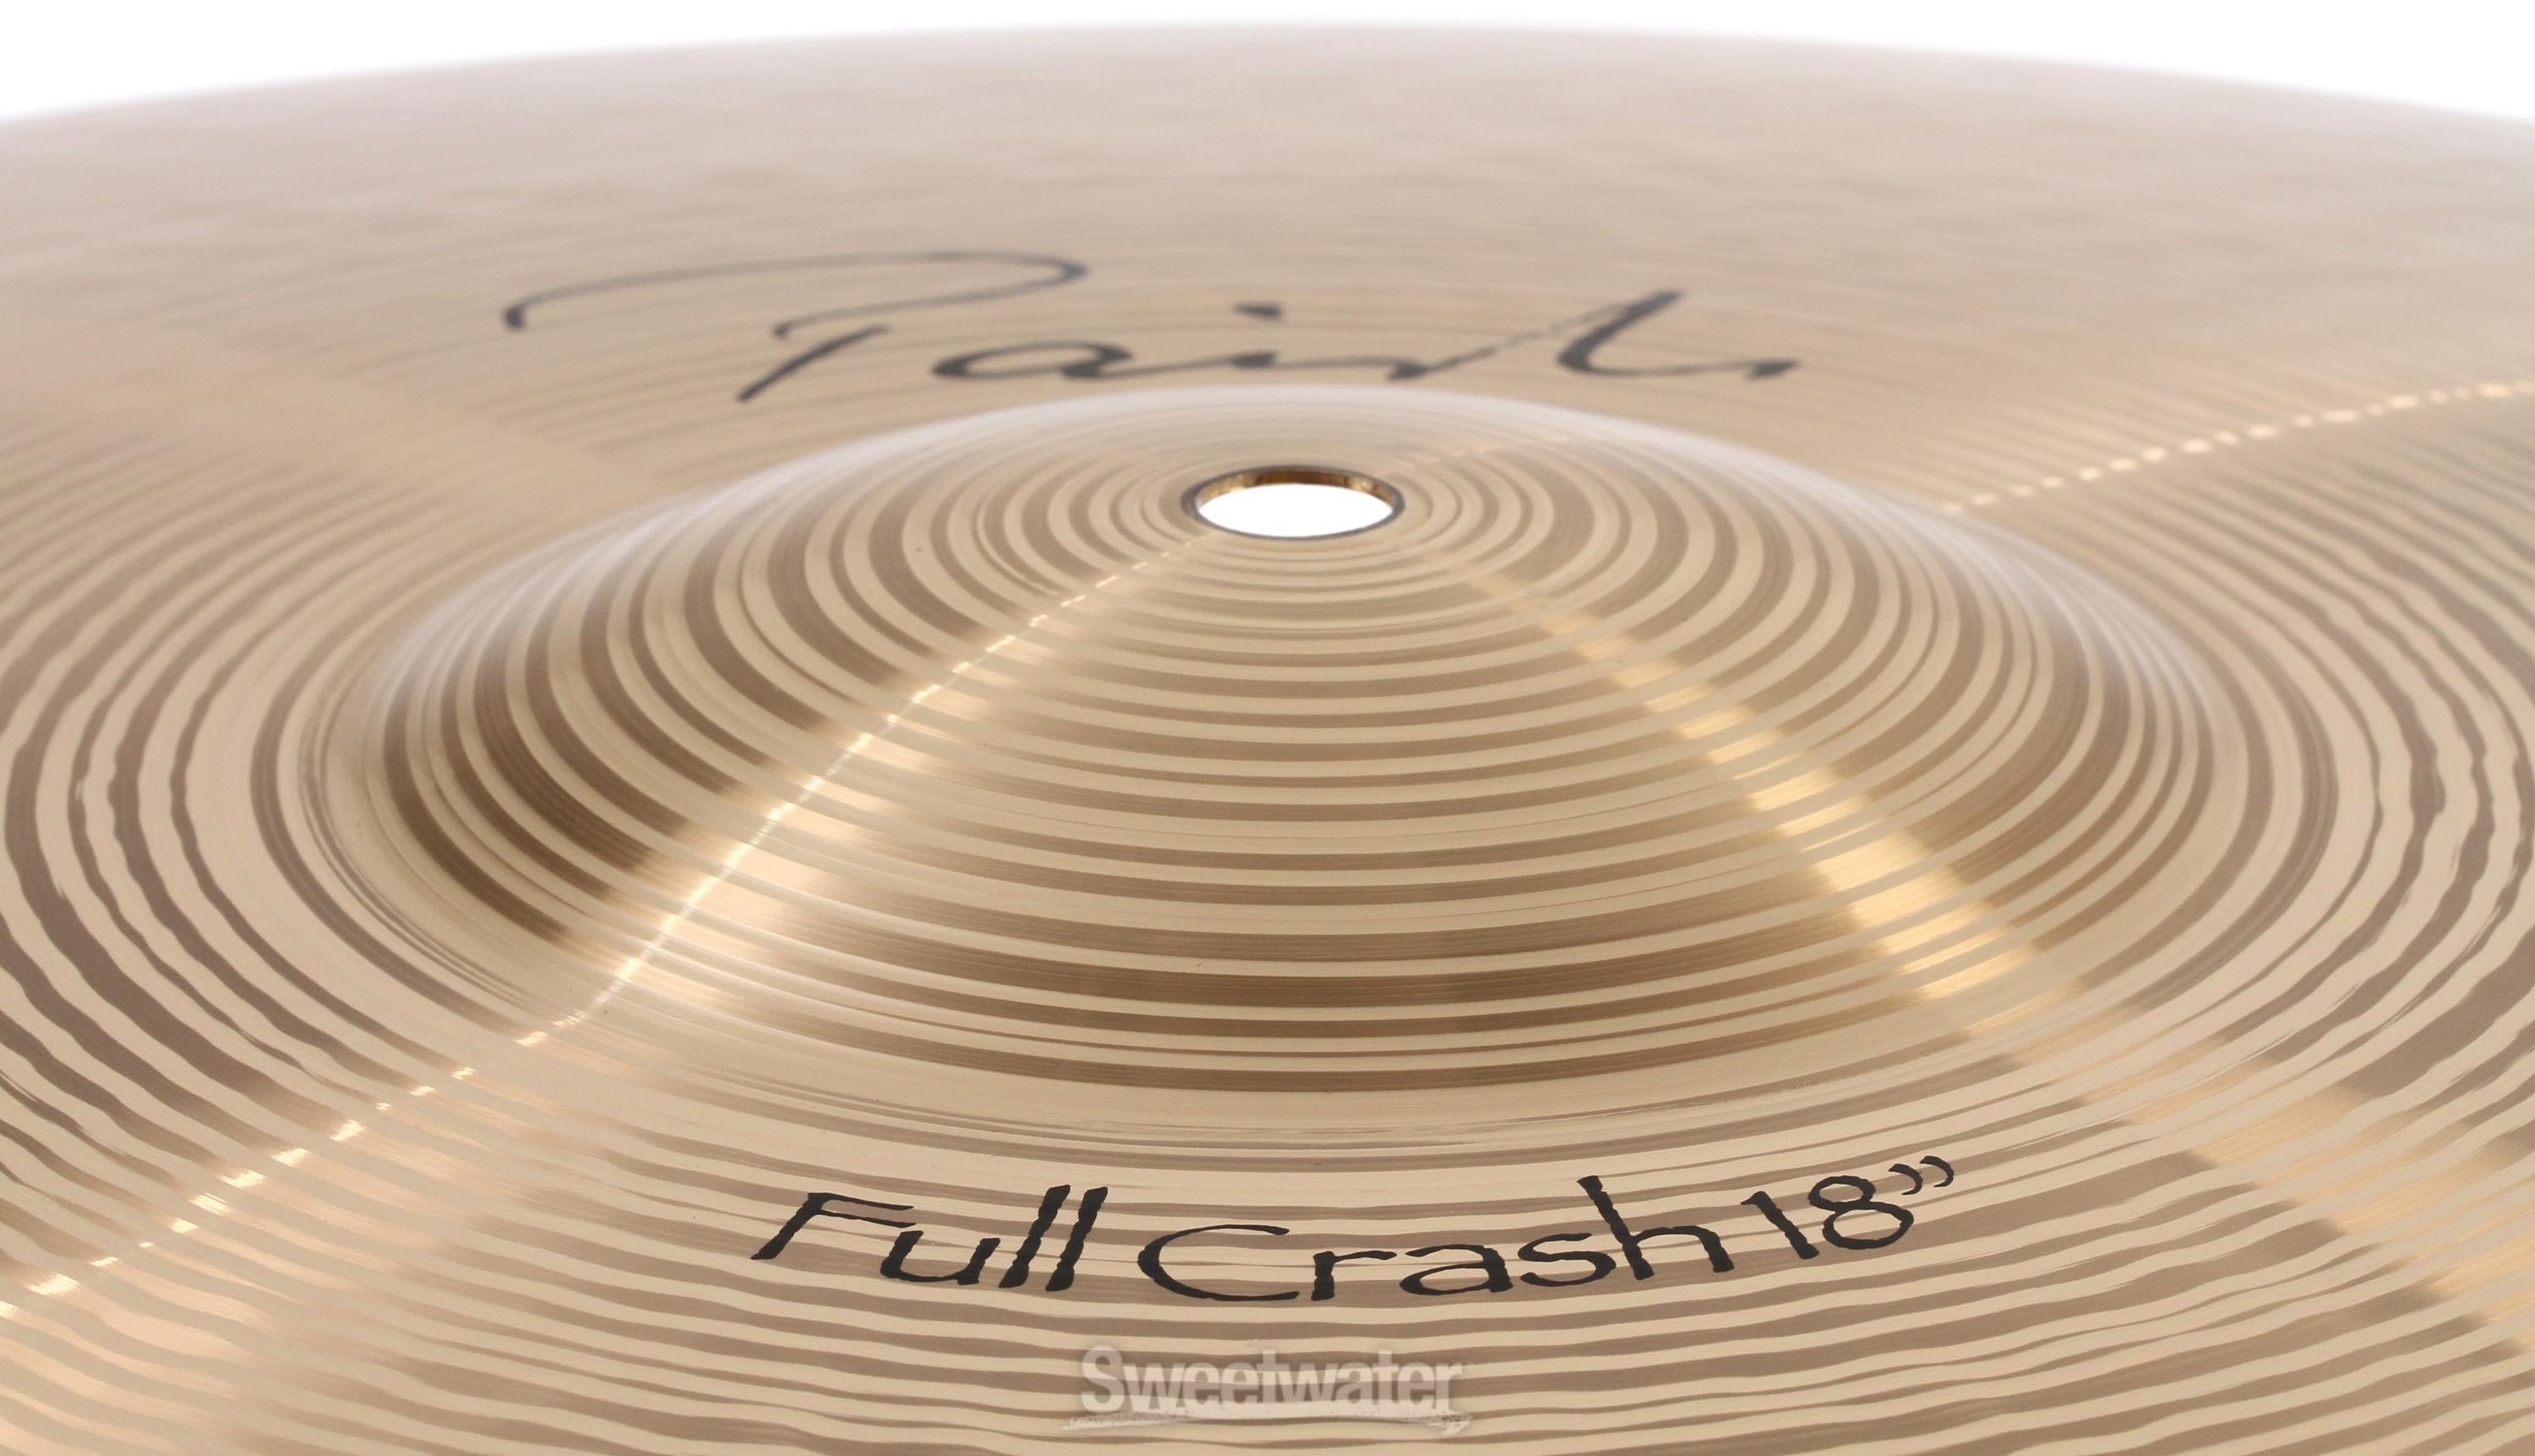 Paiste 18 inch Signature Full Crash Cymbal